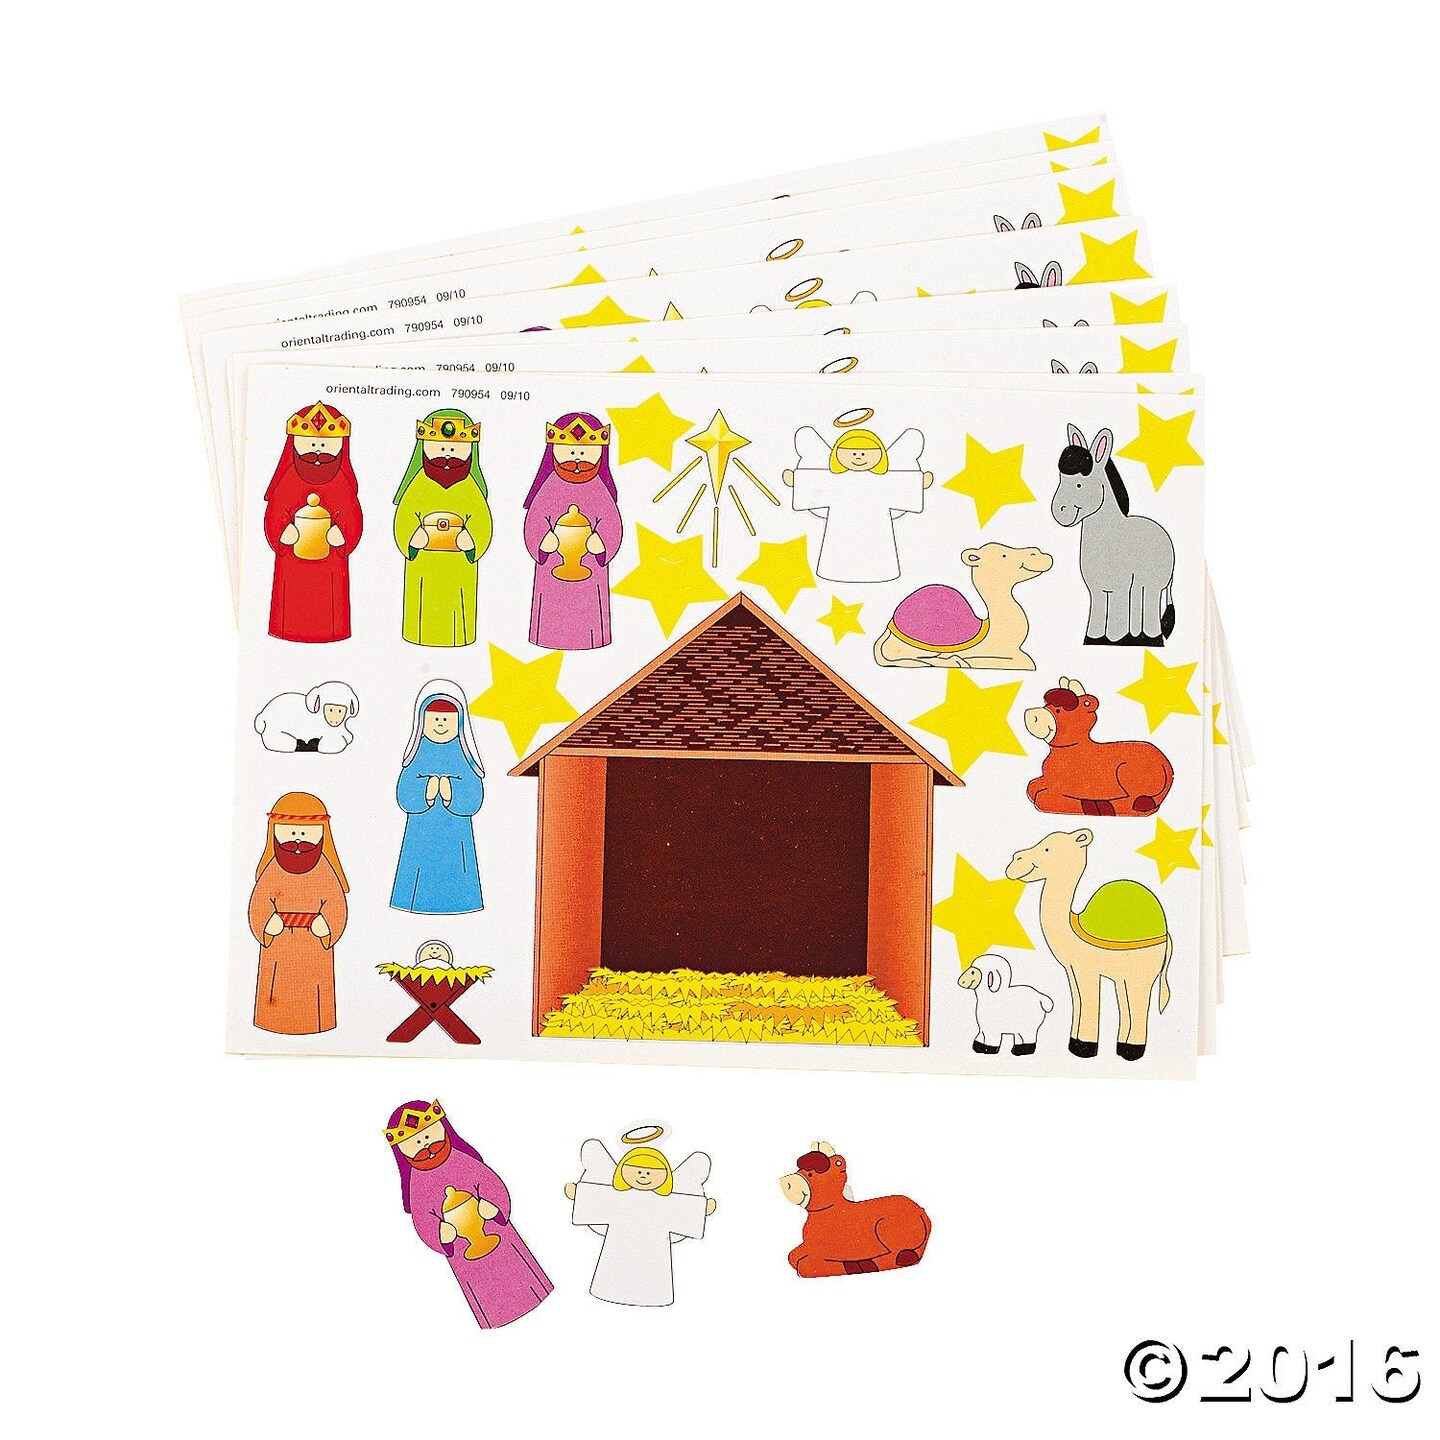 Fun Express 2 Dozen (24) Make a Nativity Scene Sticker Sheets Religious Education - VBS Christmas Party Classroom Activity Favors - Holiday by OTC